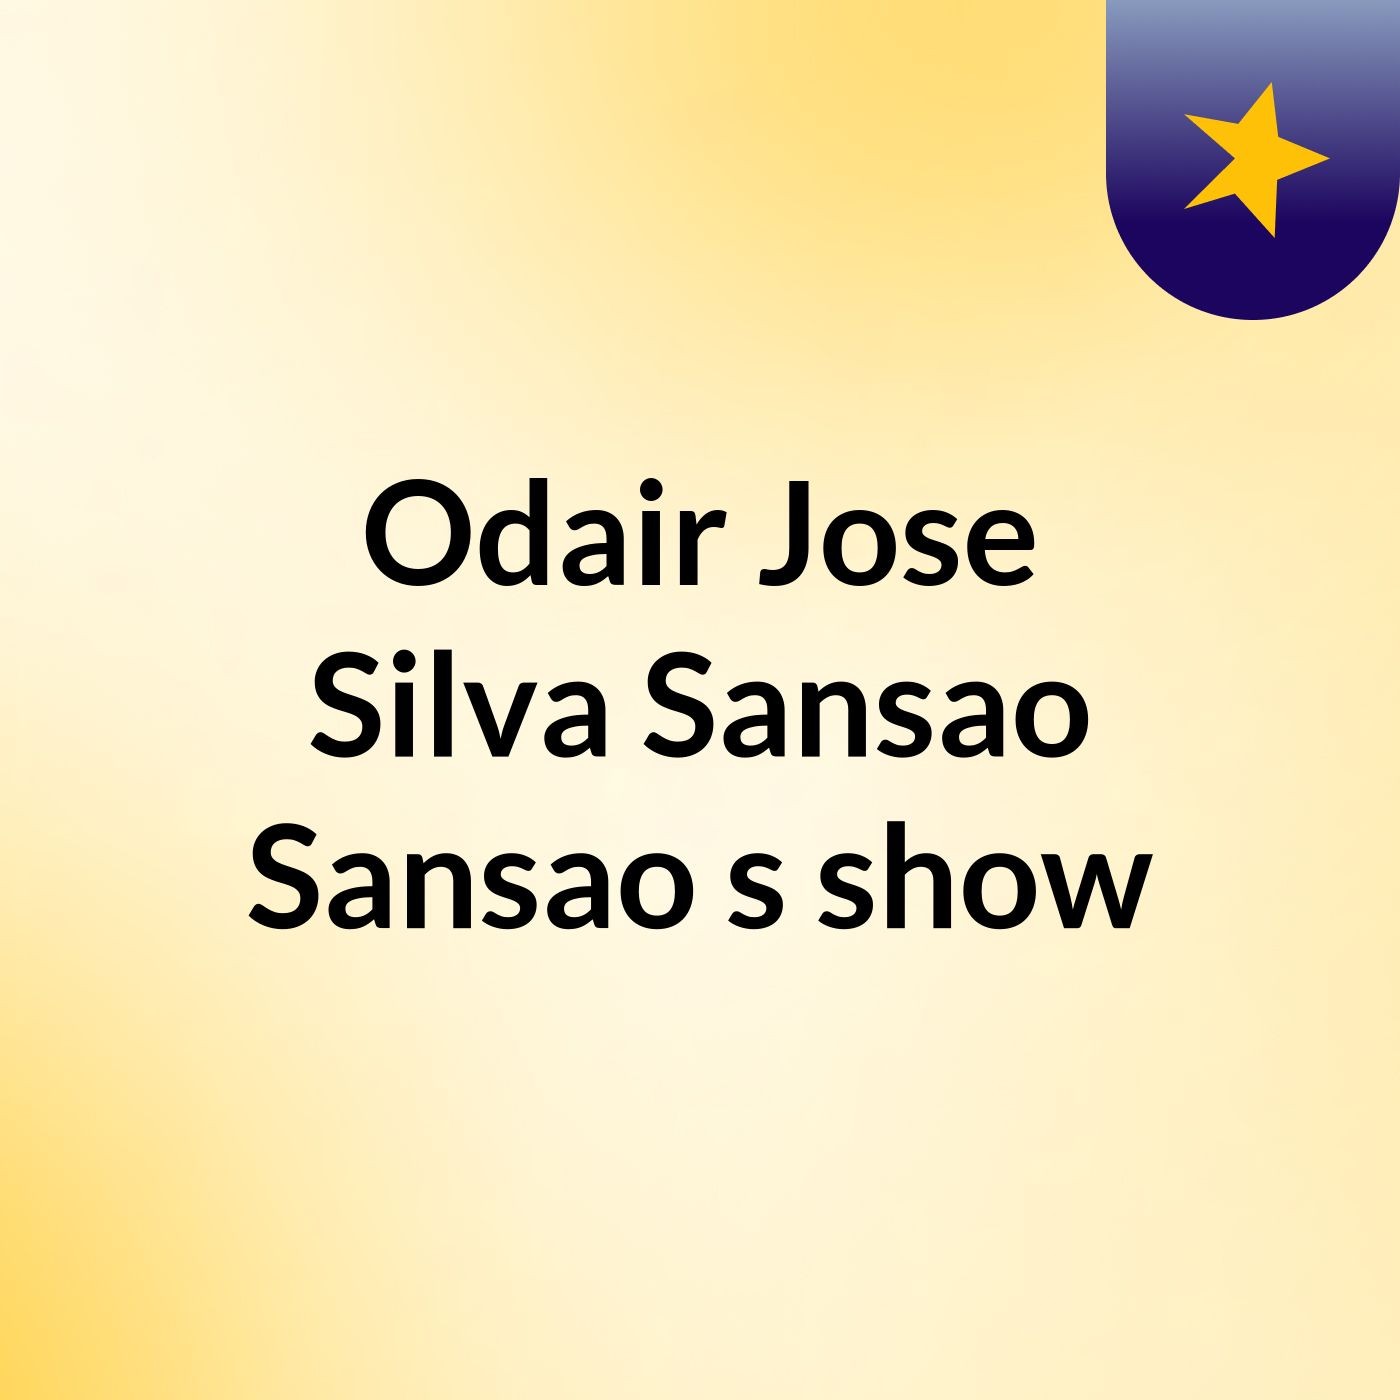 Episódio 15 - Odair Jose Silva Sansao Sansao's show